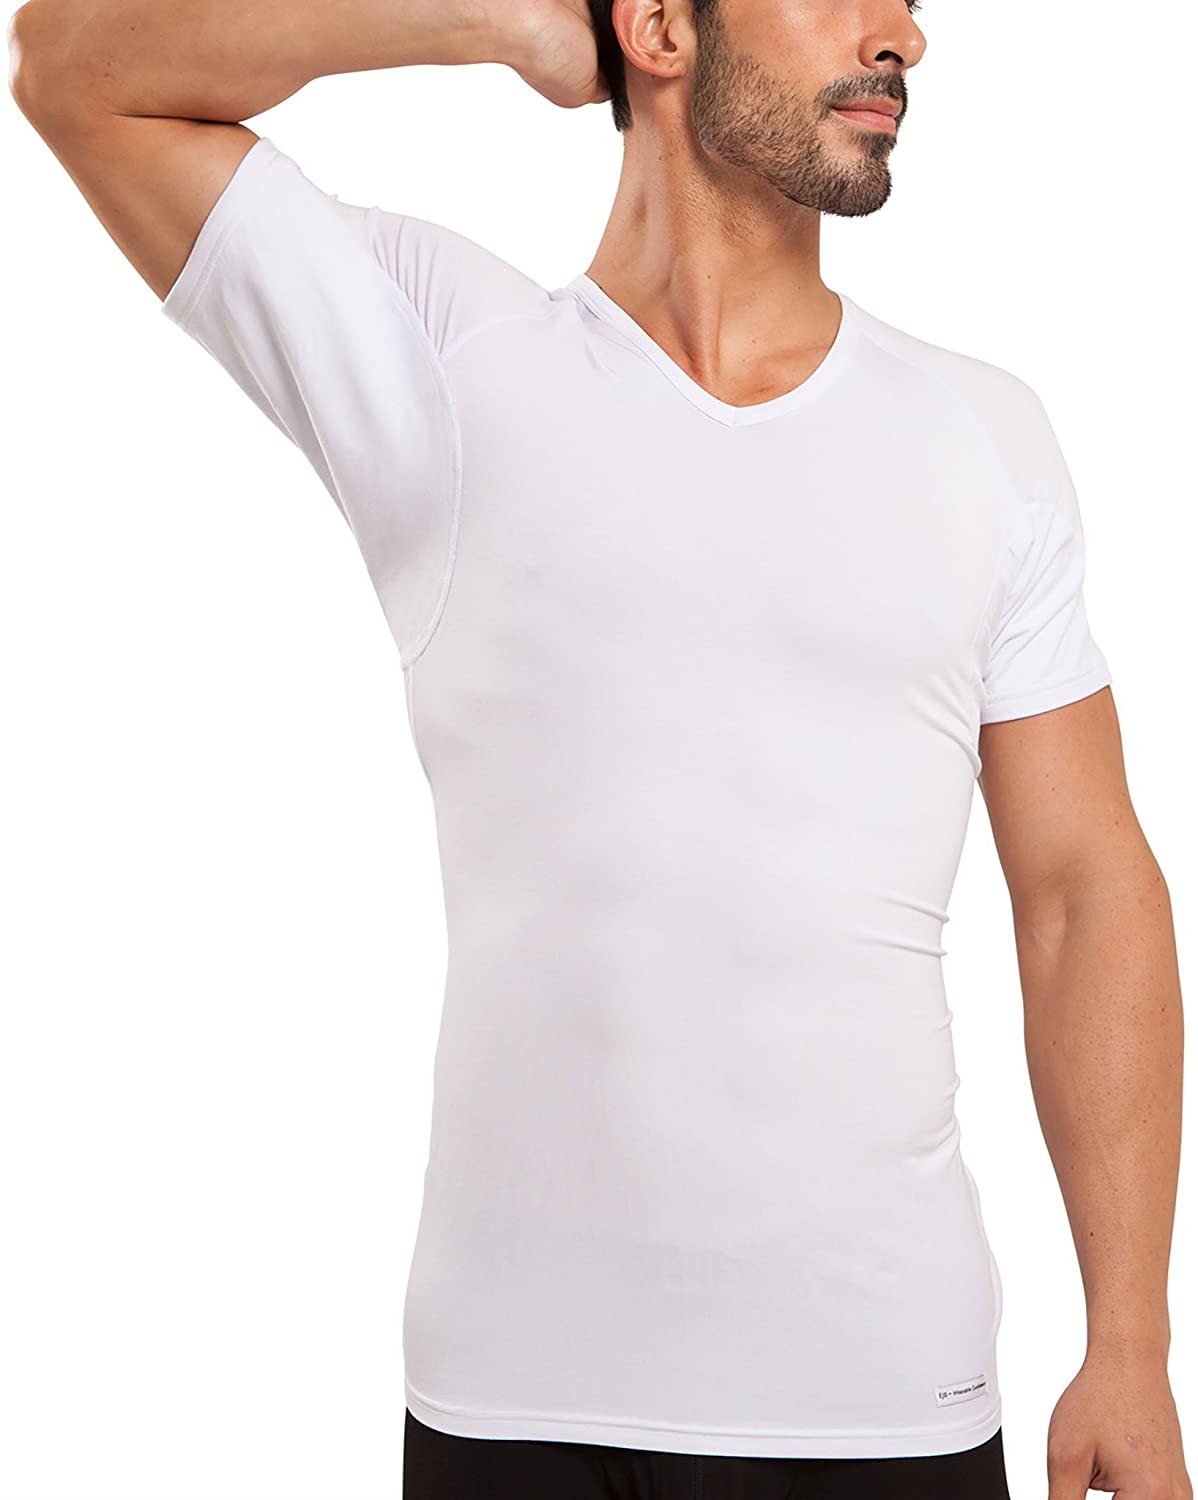 Enerup Wholesale 100% polyester Sweatproof Undershirt For Men Elastic Breathable T Shirt Deep V Neck T Shirts For Men